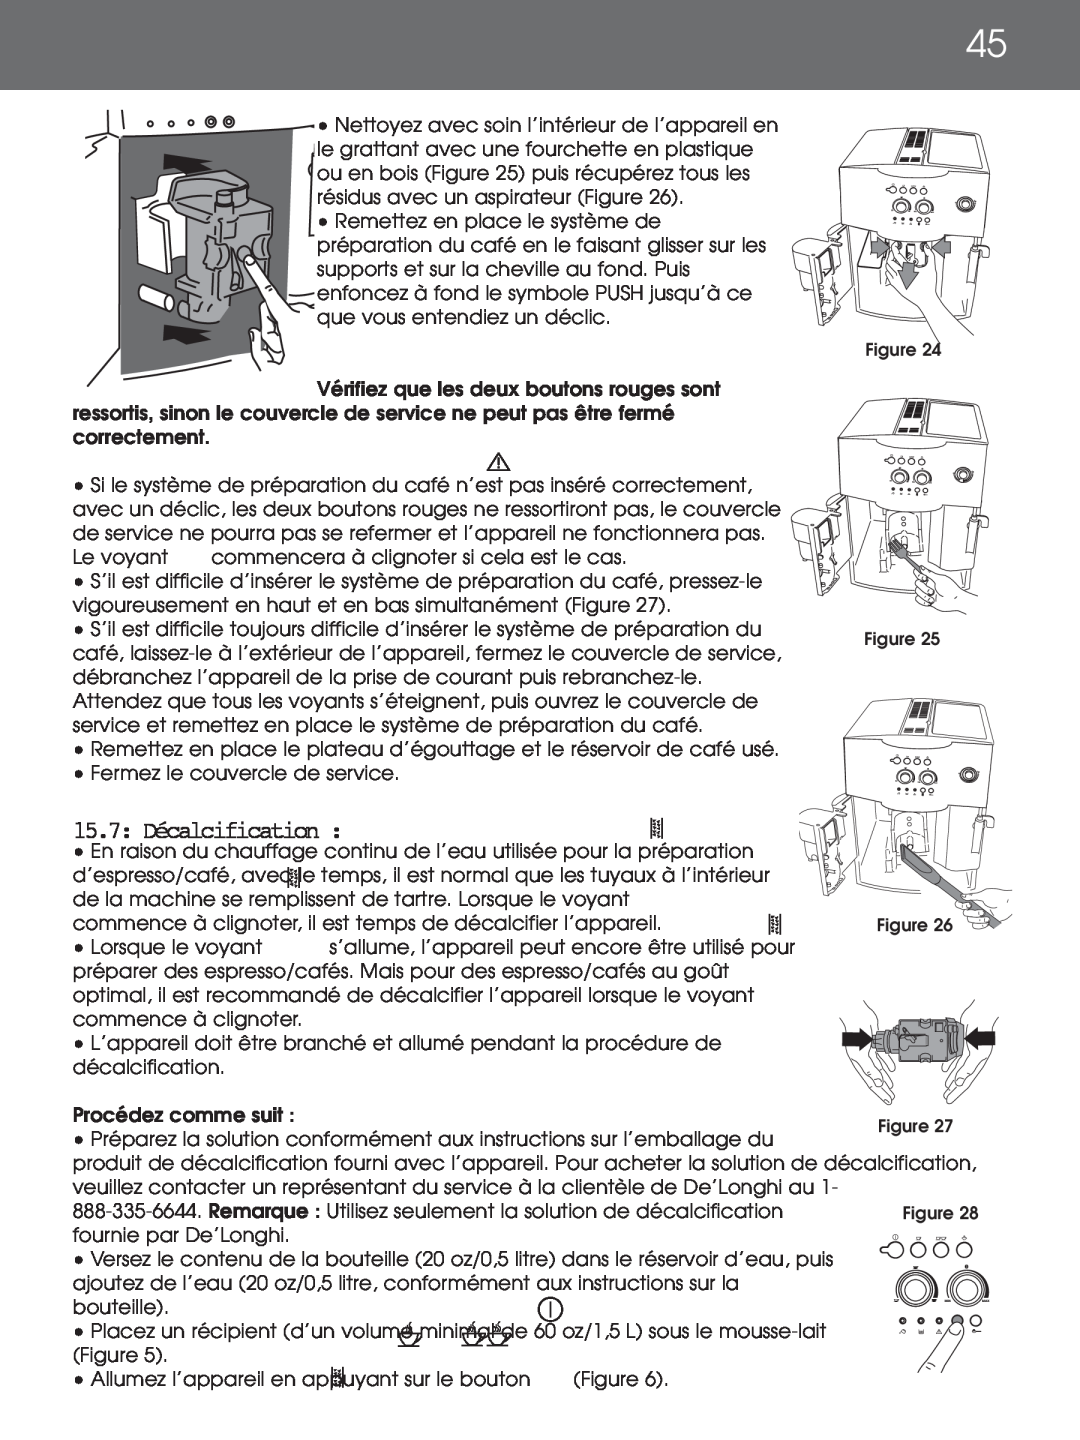 DeLonghi EAM4000 instruction manual 15.7: Décalcification 